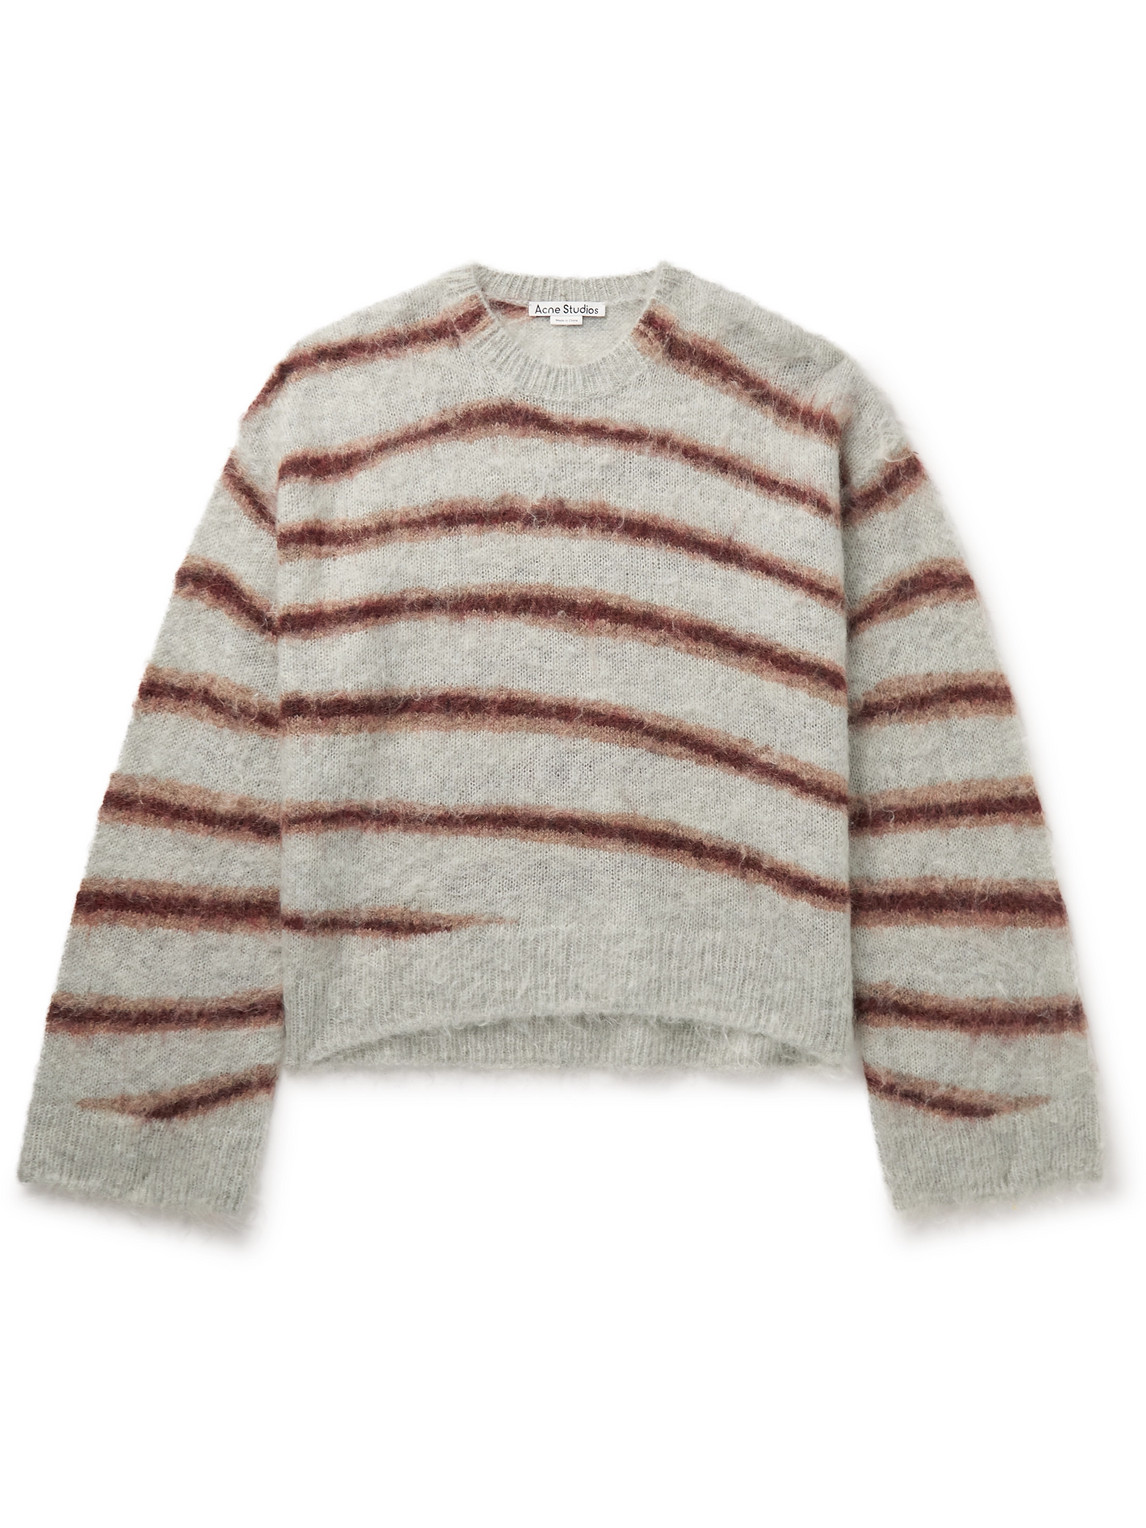 Acne Studios - Kwatta Striped Brushed-Knit Sweater - Men - Gray - S von Acne Studios